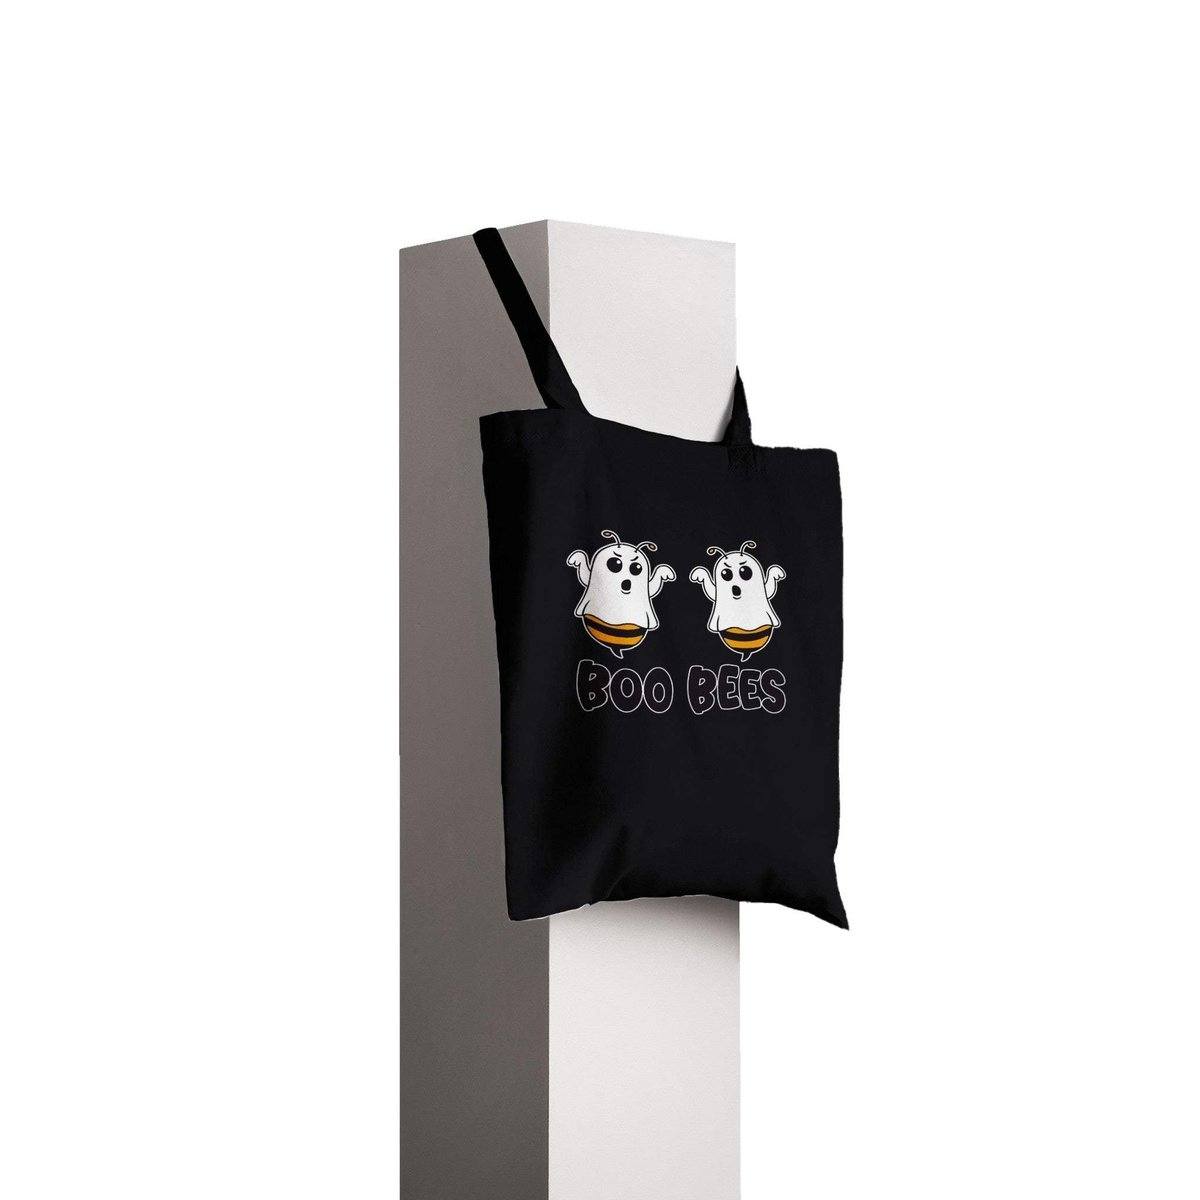 Boo Bees Tote Bag - Classic Tote Bag Australia Online Color Black